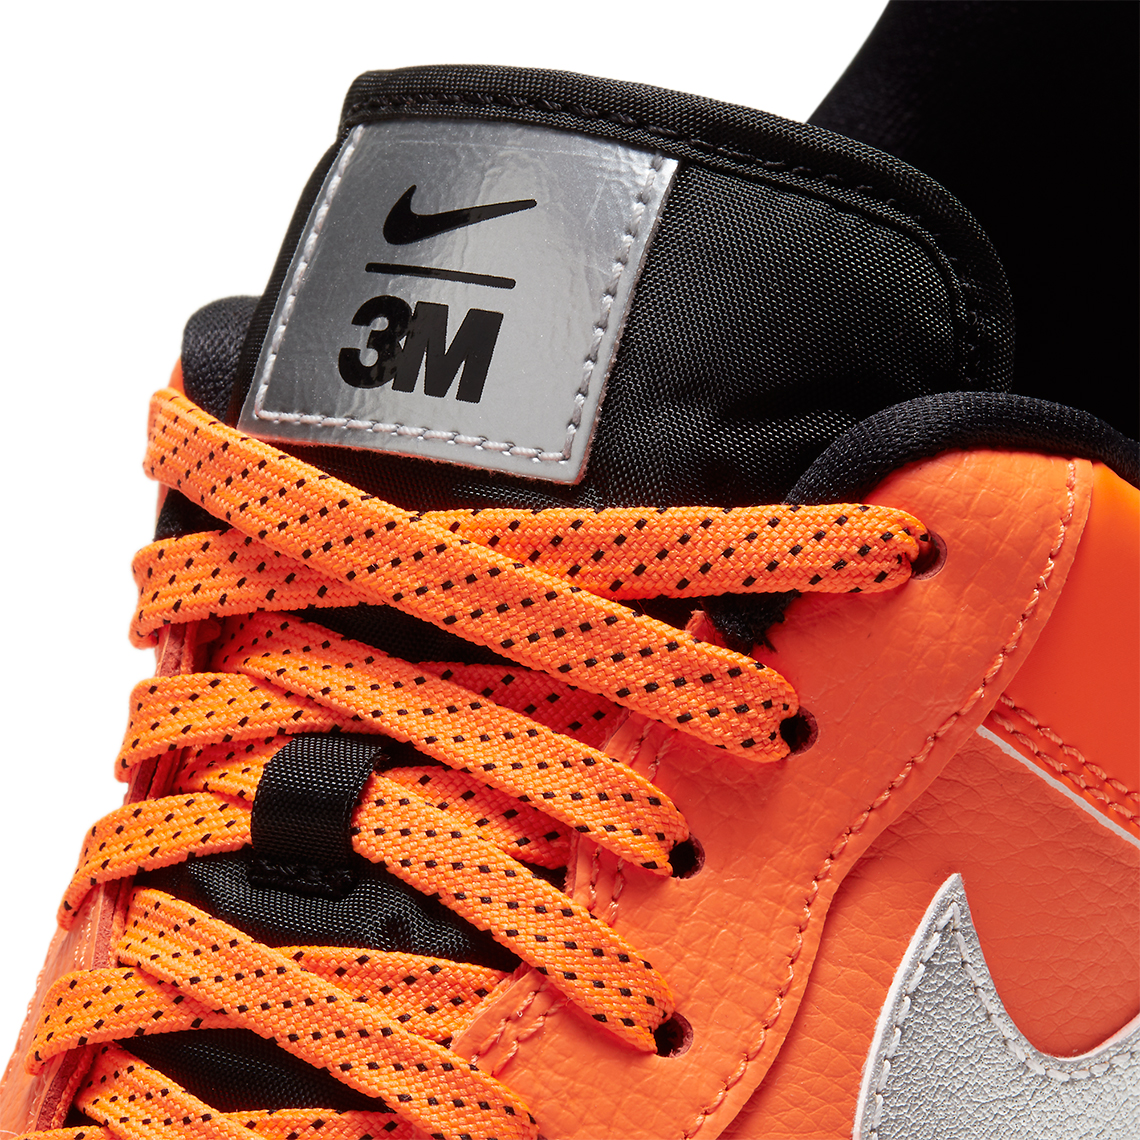 Nike 3M x Air Force 1 '07 SE 'Total Orange